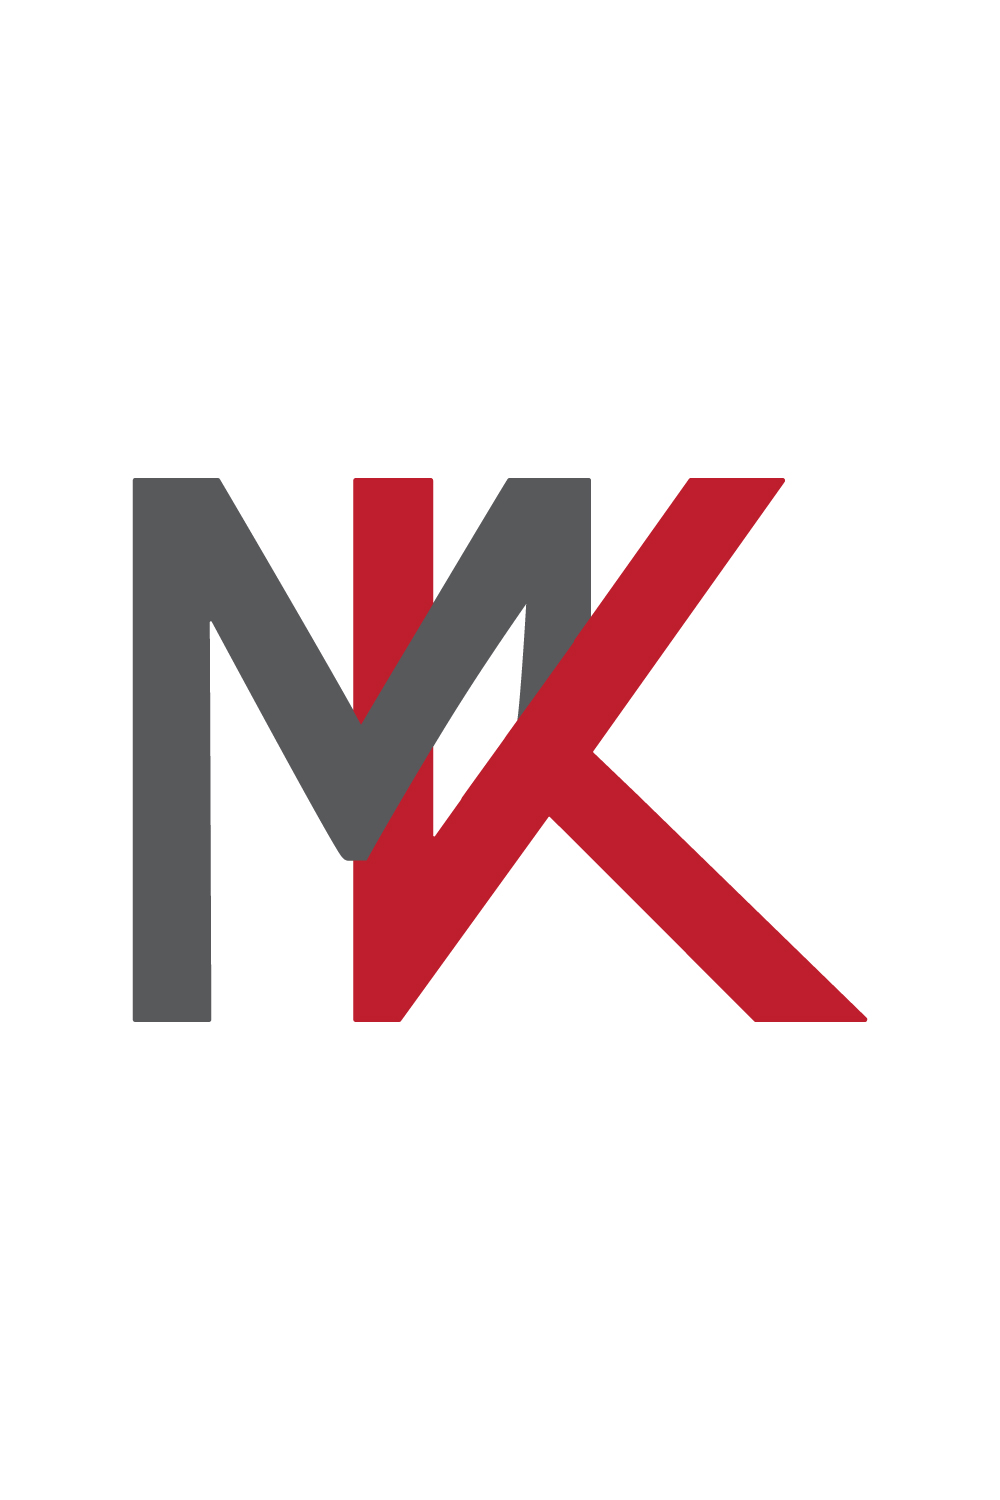 Professional MK letters logo design MK logo red and black color best icon KM logo monogram design pinterest preview image.